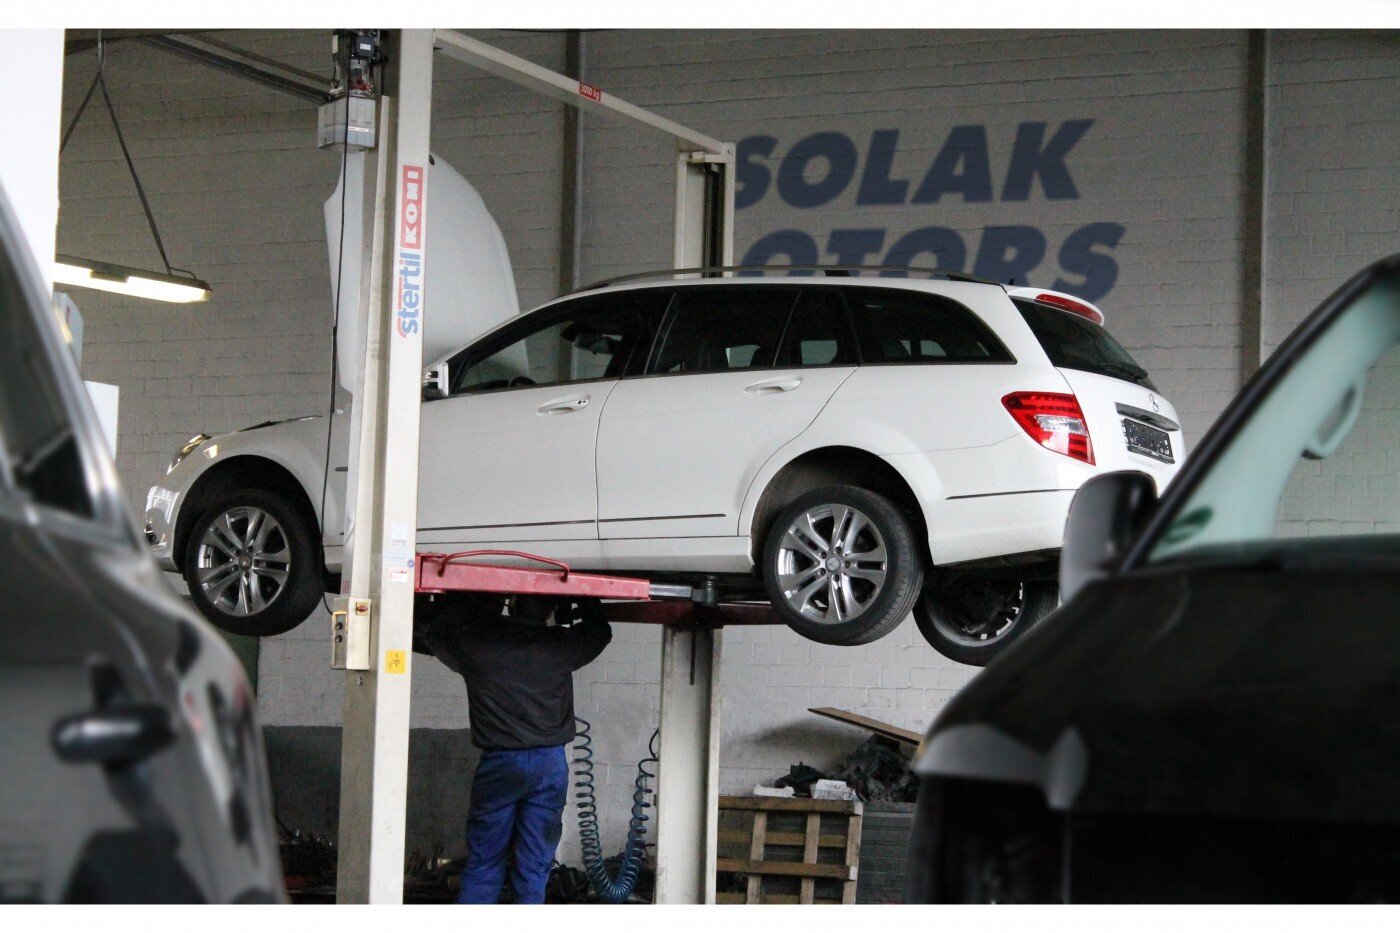 Kundenbild groß 3 Solak Motors